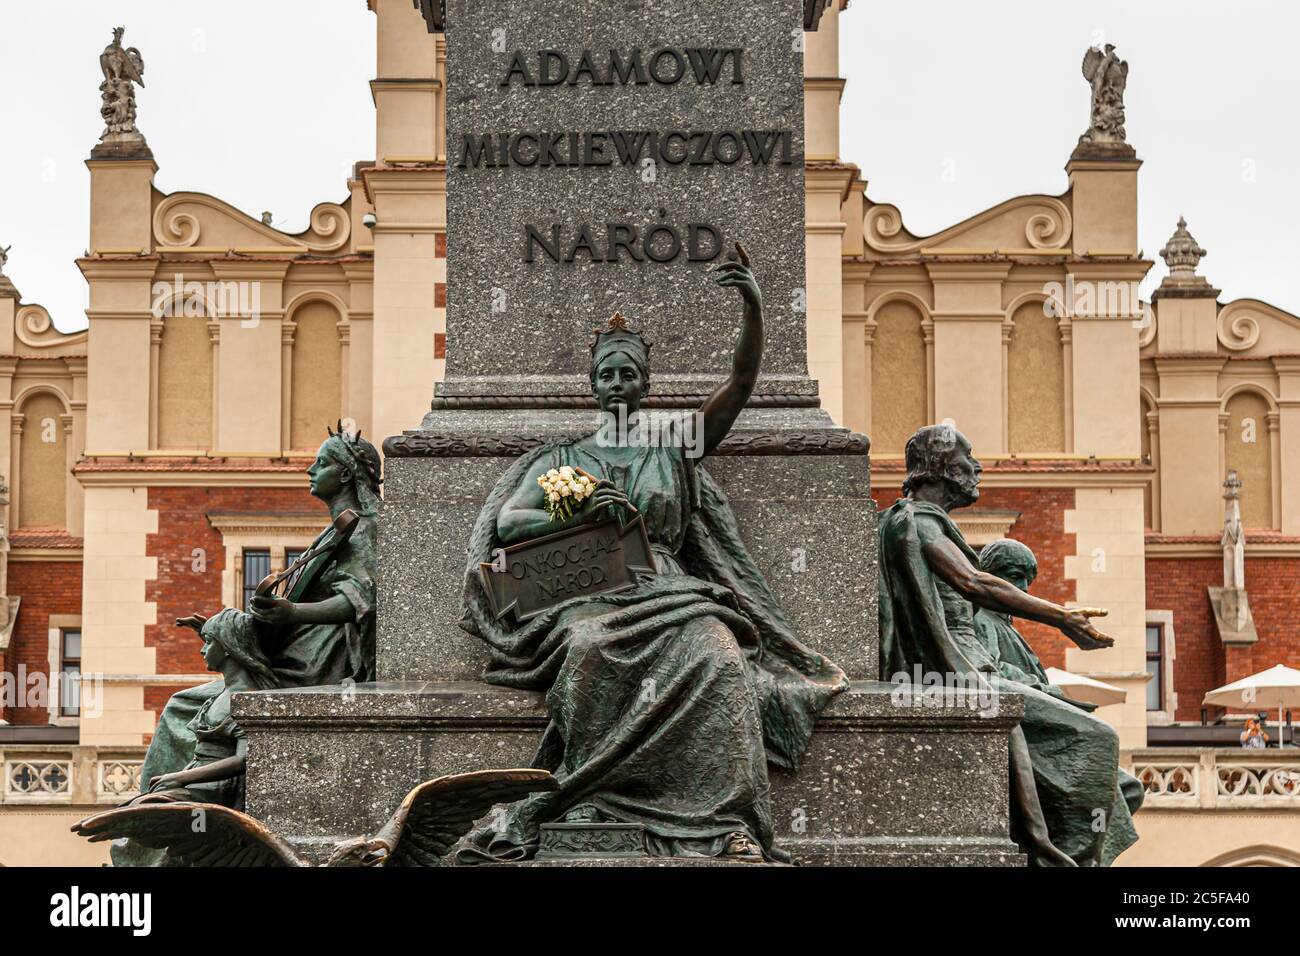 Monument to Adam Mickiewicz in front of the Kraków Cloth Halls (Sukiennice) in Krakow, Poland Stock Photo